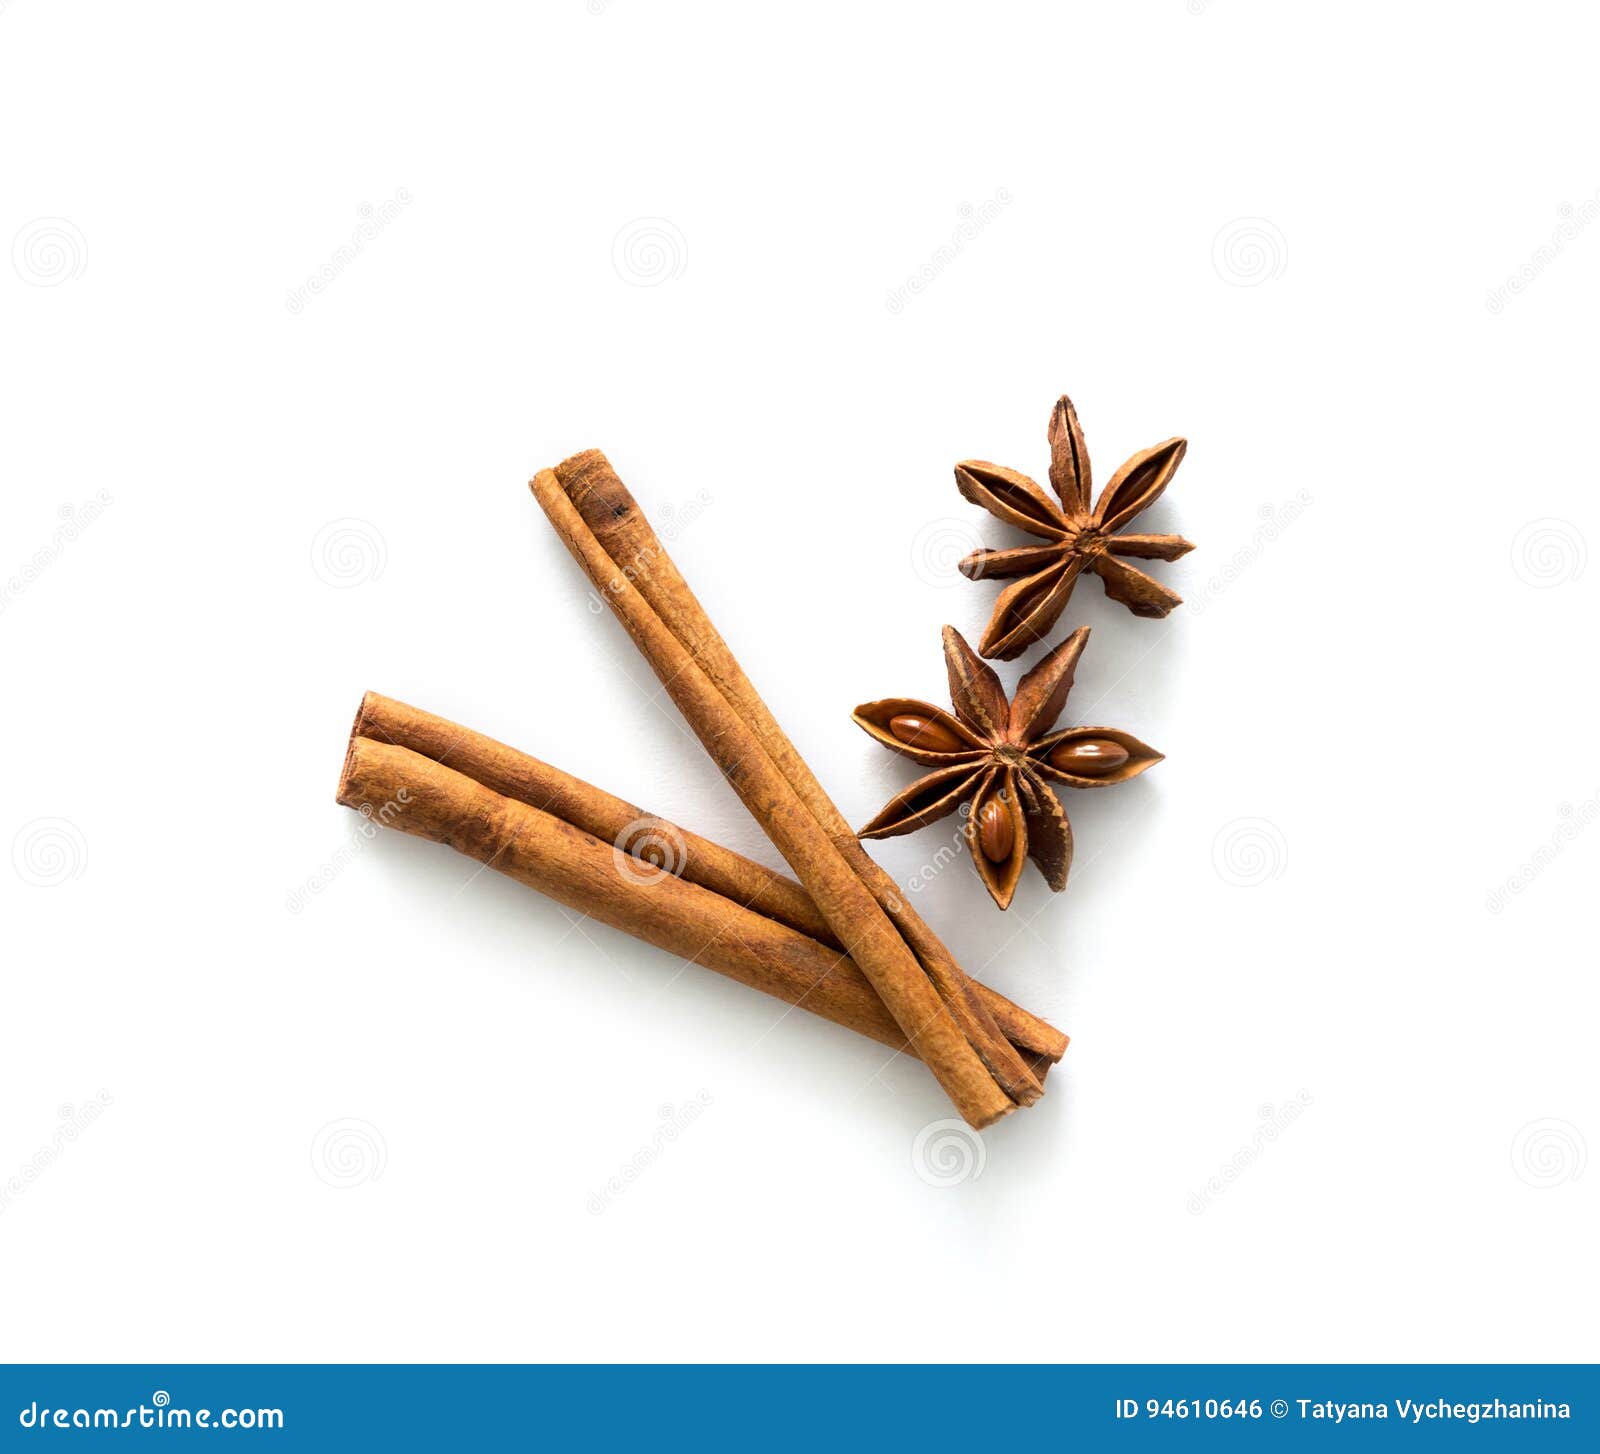 two cinnamon sticks lying on table, topview